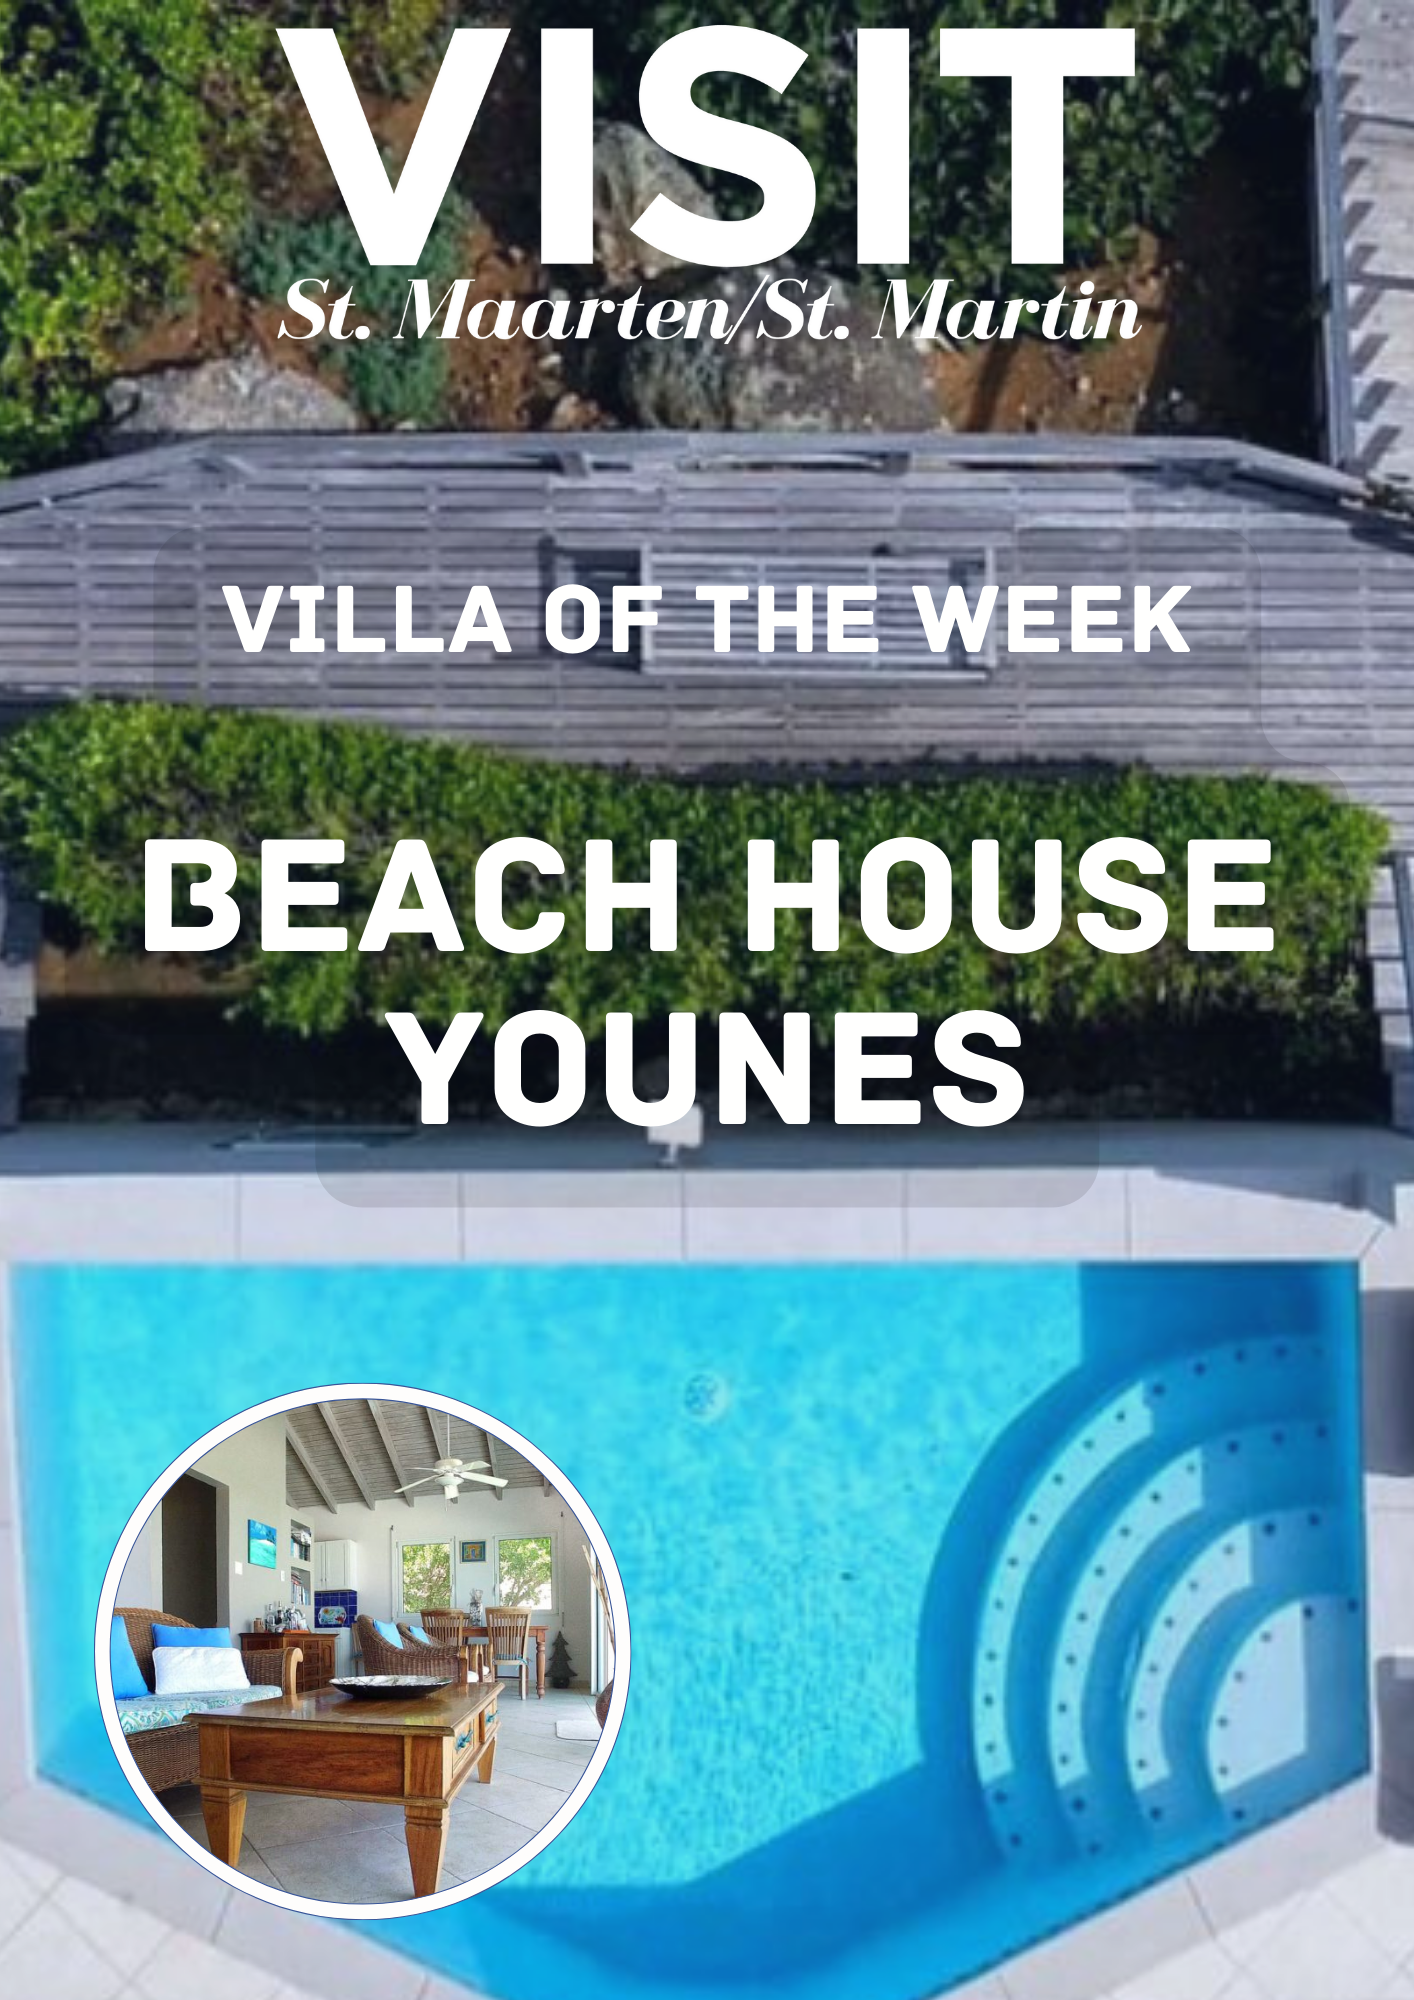 Beach House Younes, Villa of the week St Maarten, Philipsburg, Simpson Bay, Dutch Side St Maarten